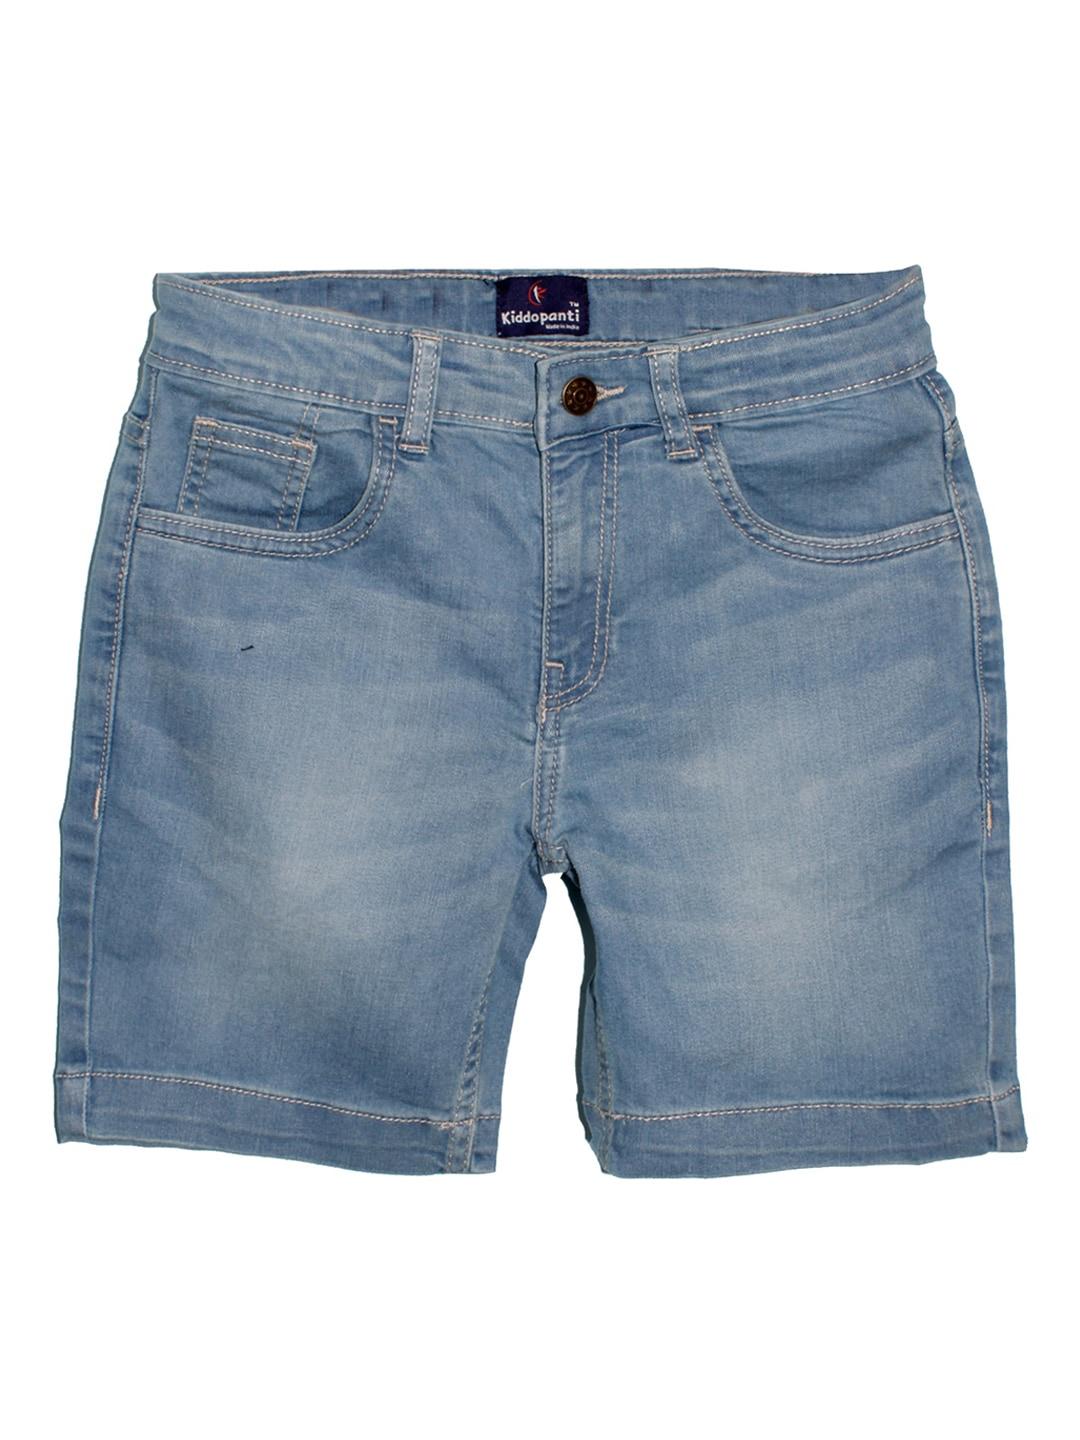 KiddoPanti Boys Mid-Rise Denim Shorts